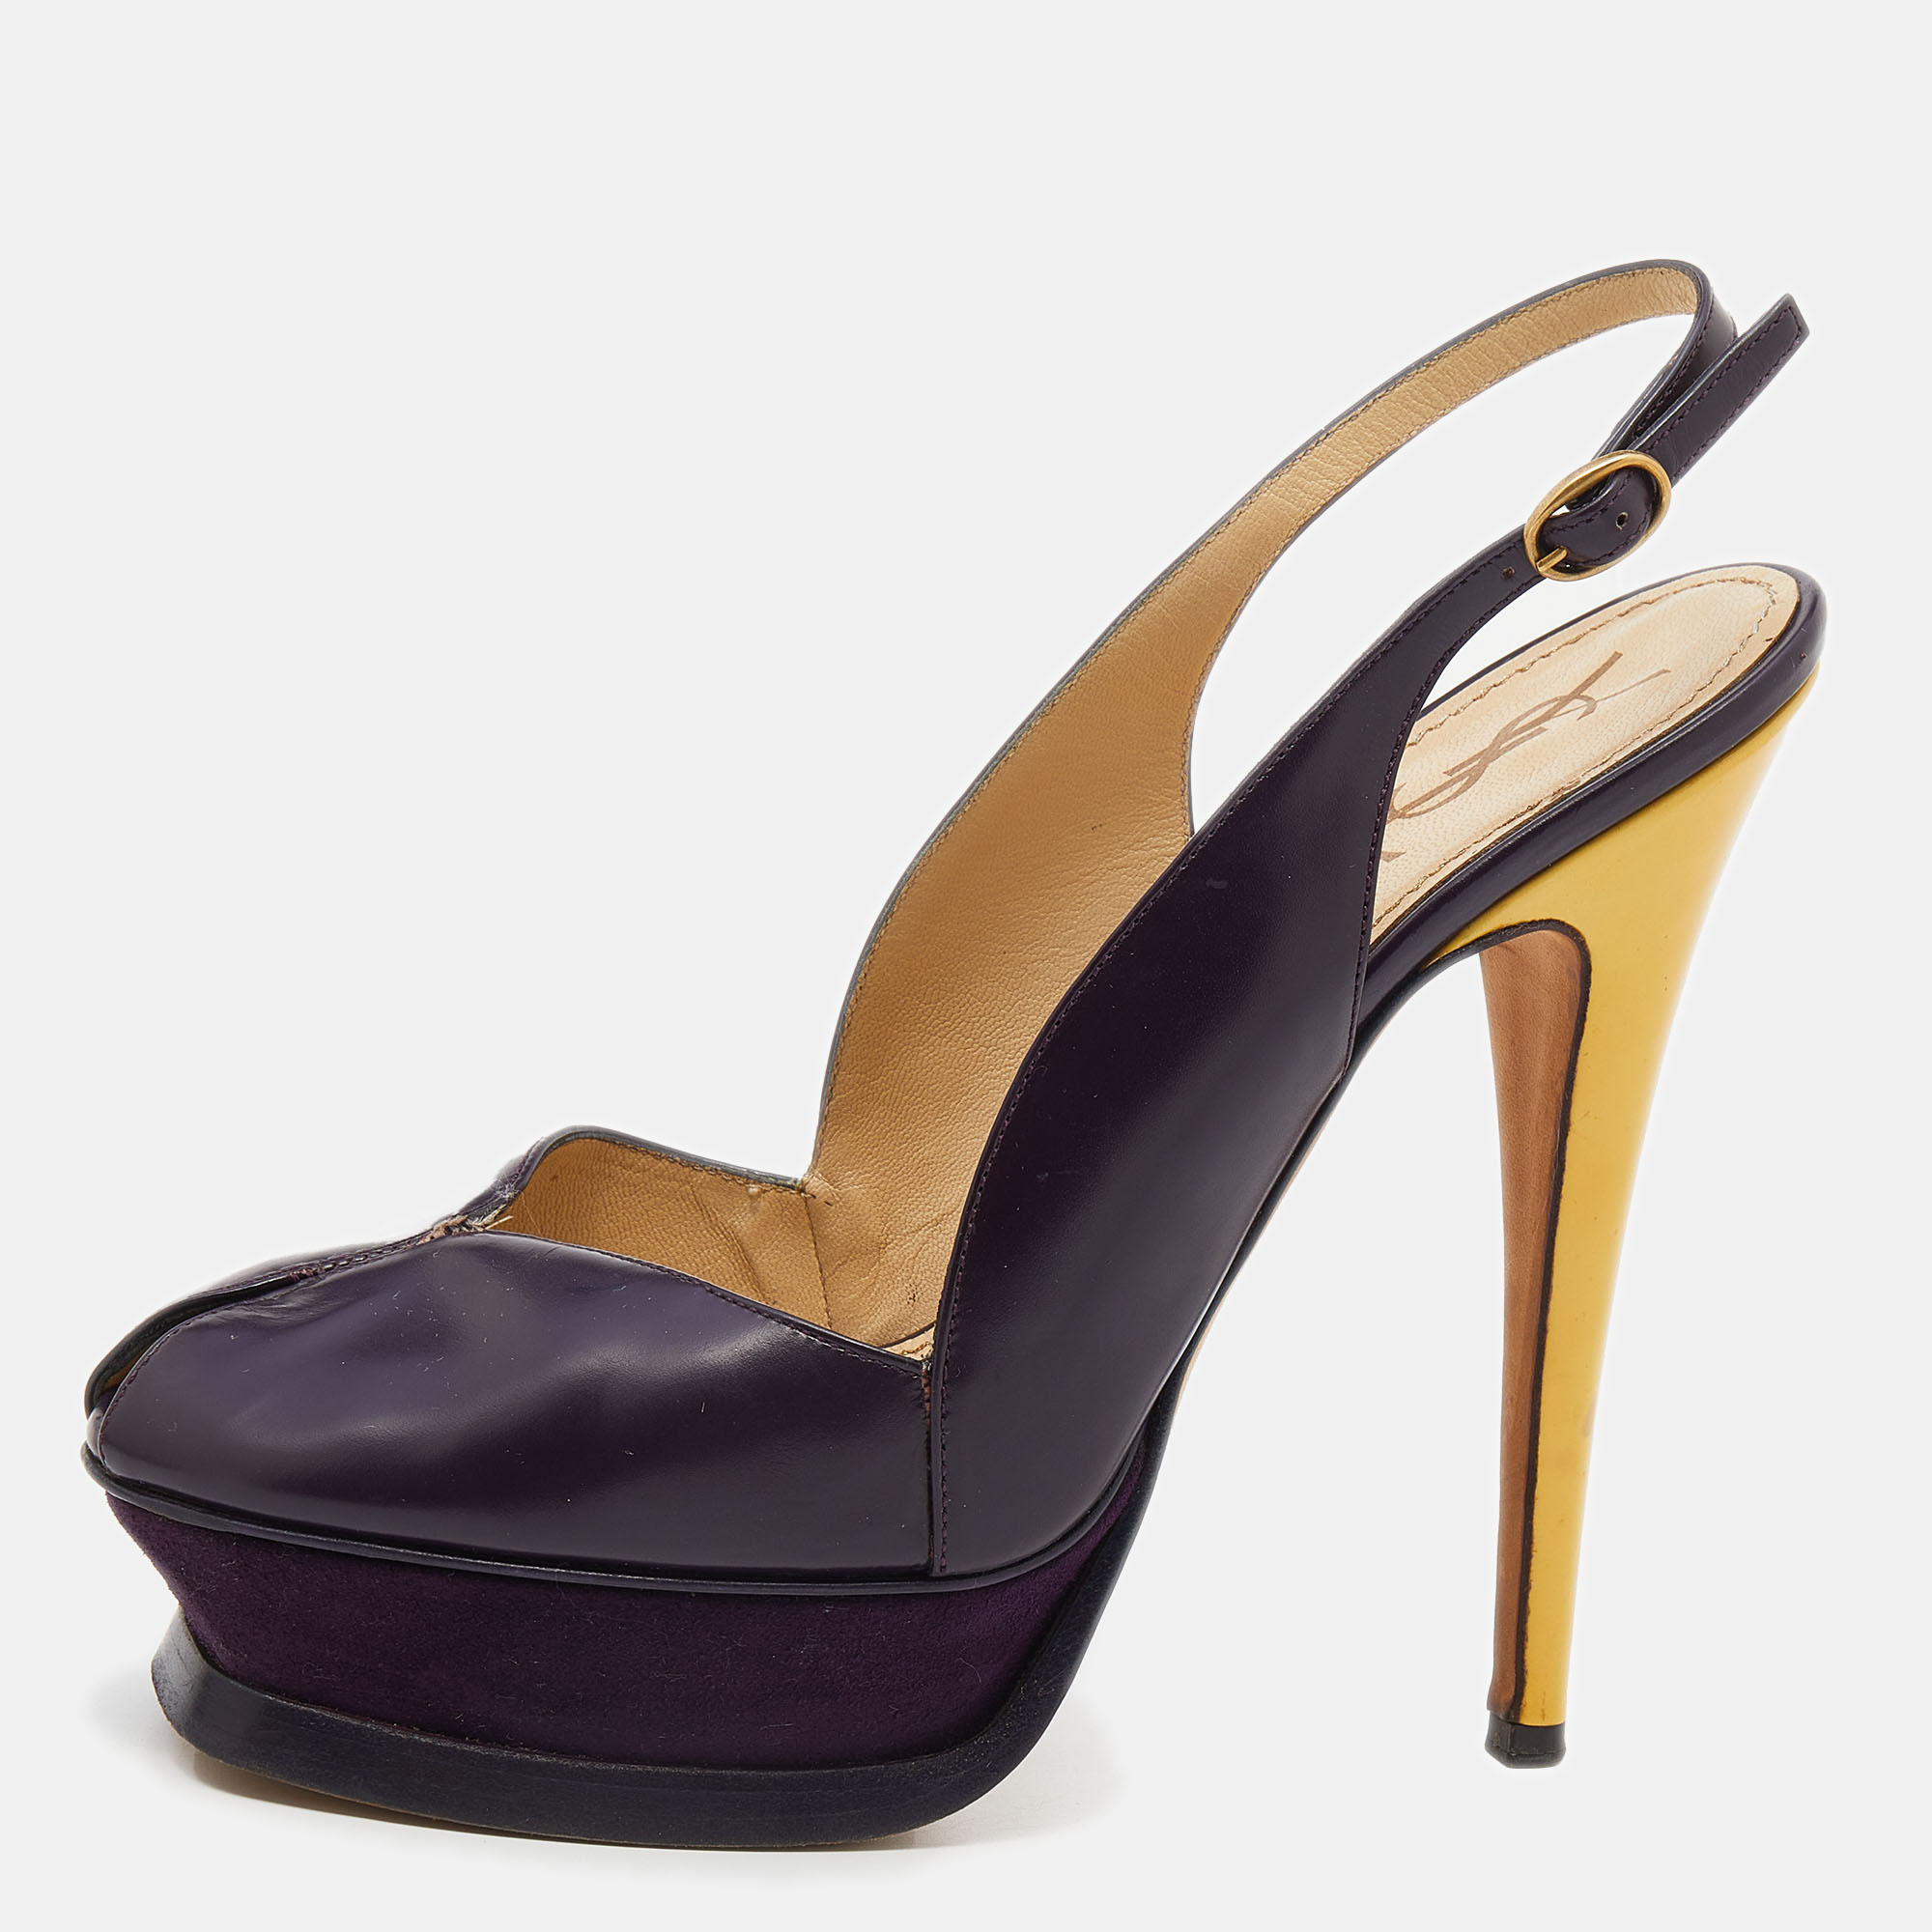 Yves saint laurent purple/yellow leather peep toe platform slingback sandals size 38